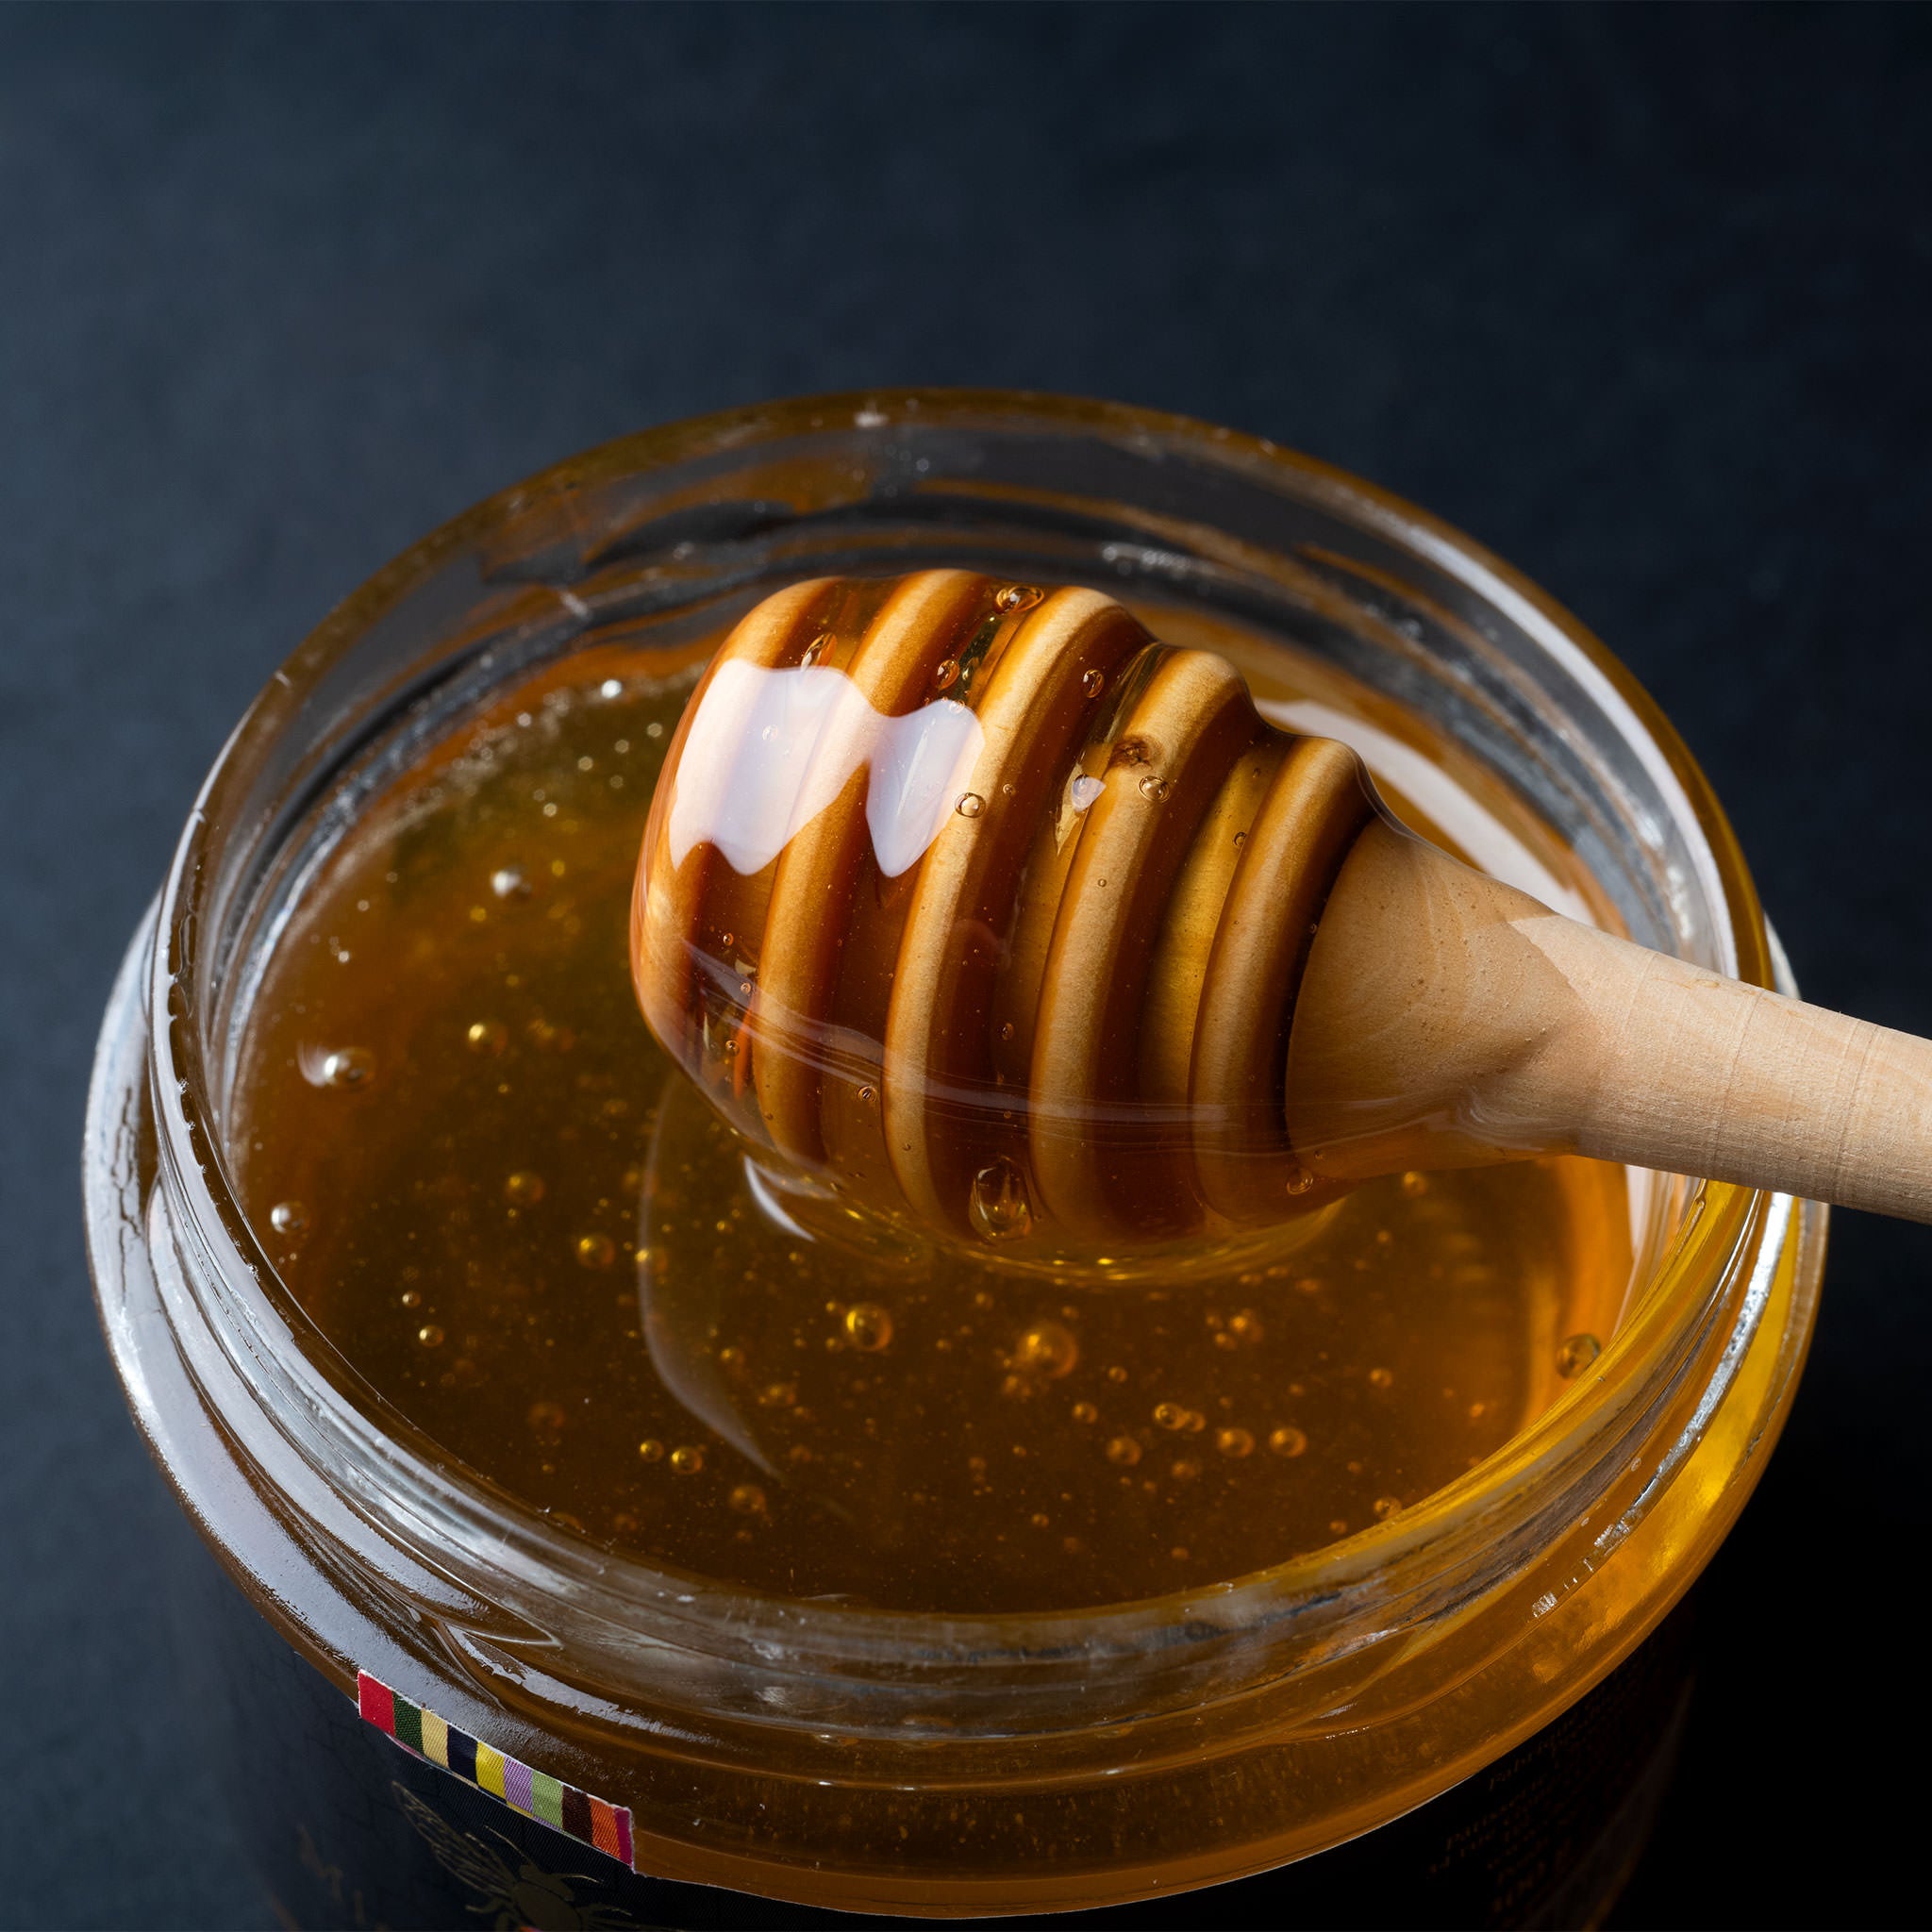 Roanne honey